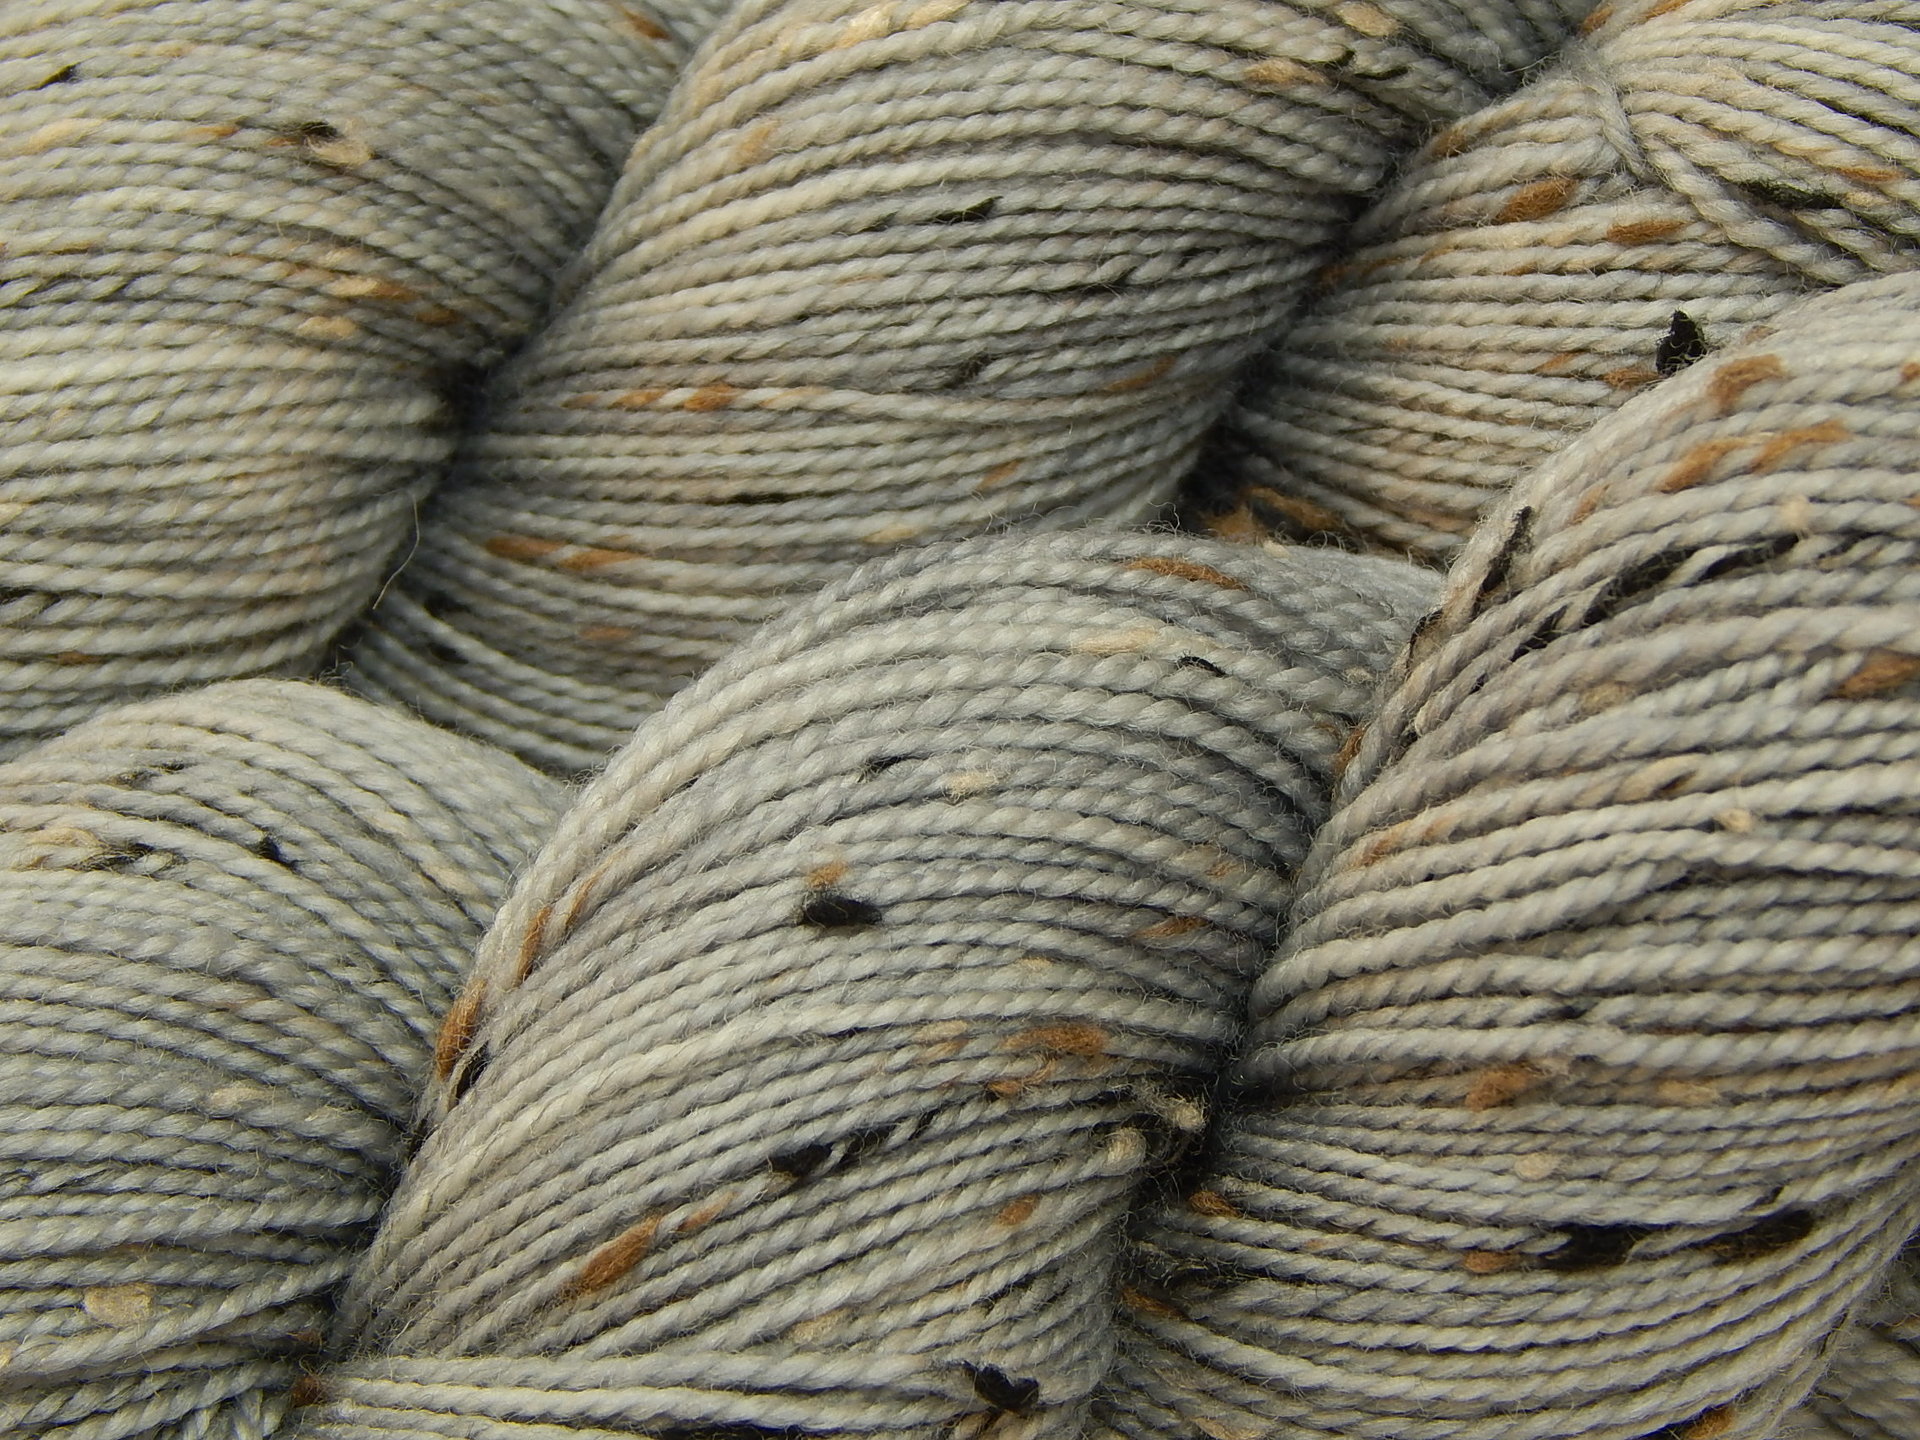 Hand Dyed Yarn, Tweed Fingering Weight Superwash Merino Wool Nylon - Silver Lining - Indie Dyer Knitting Yarn, Light Grey Gray Flecks Sock Yarn